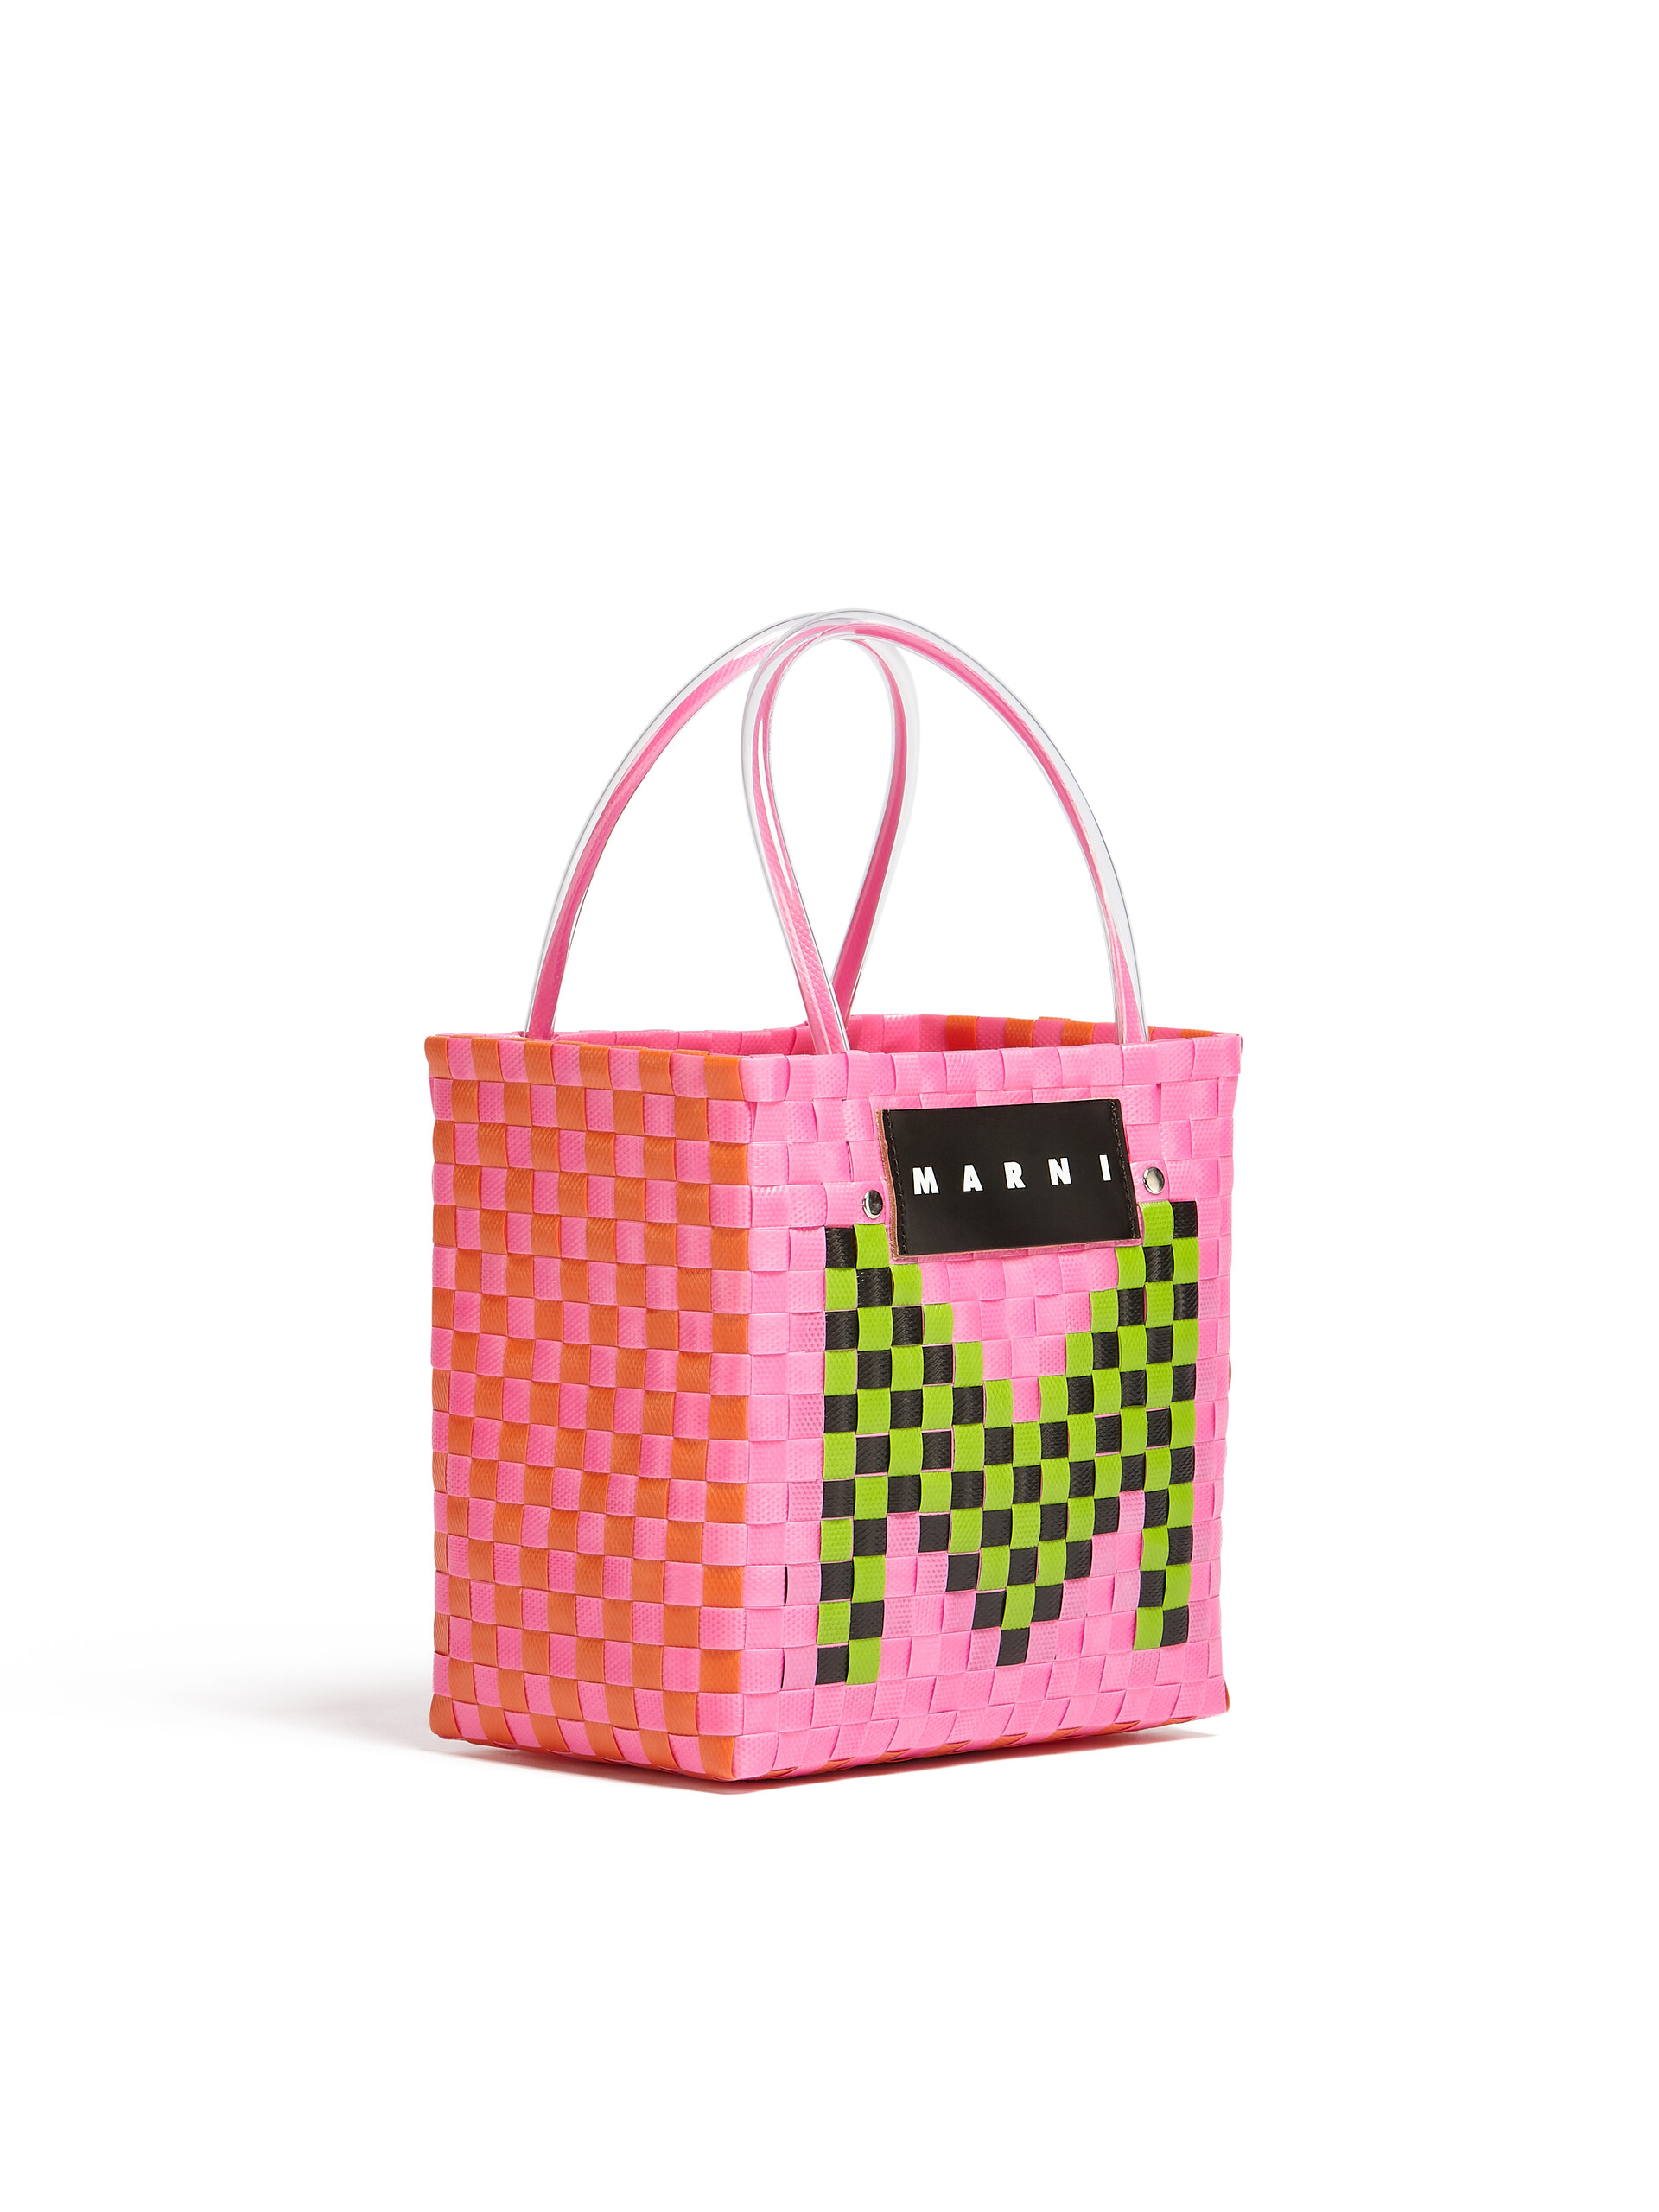 MARNI MARKET mini bag in polypropylene with pink M logo - Bags - Image 2